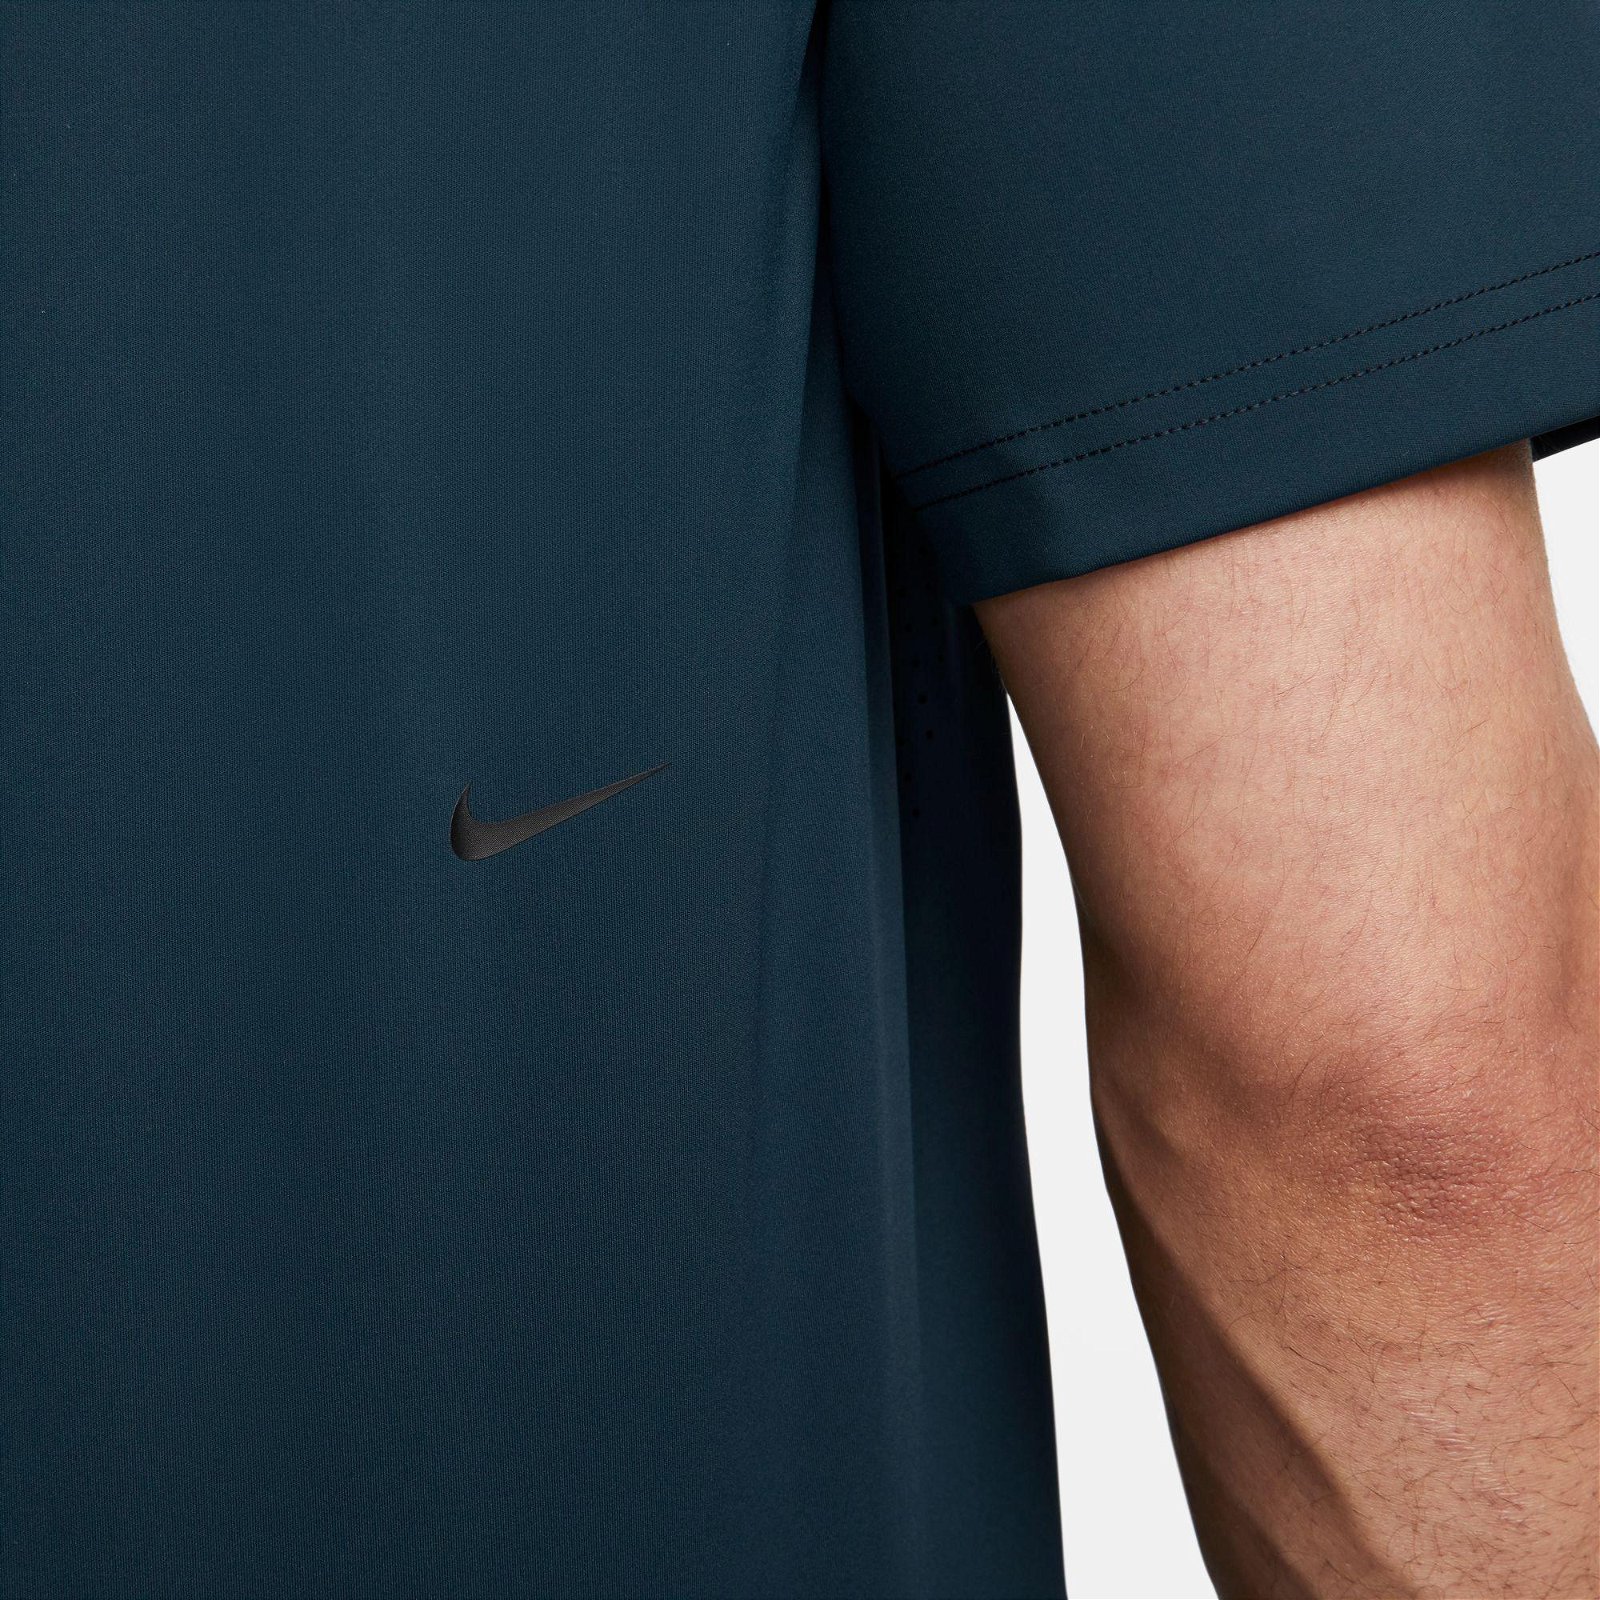 Nike Dri-Fit Adventure Aps Top Erkek Lacivert T-Shirt